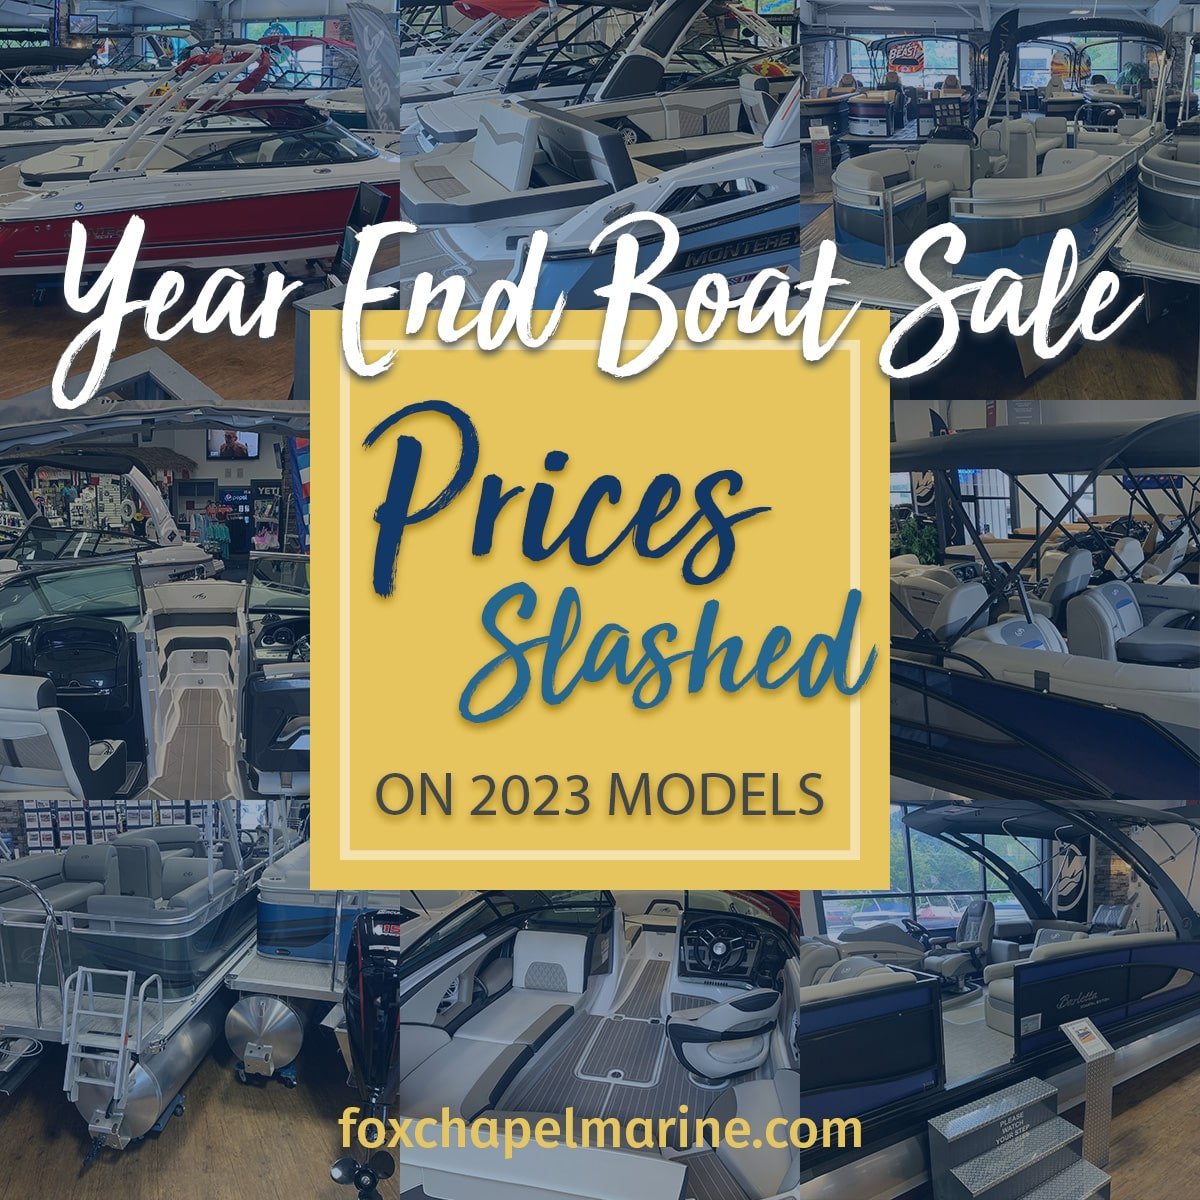 Year End Boat Sale at Fox Chapel Marine